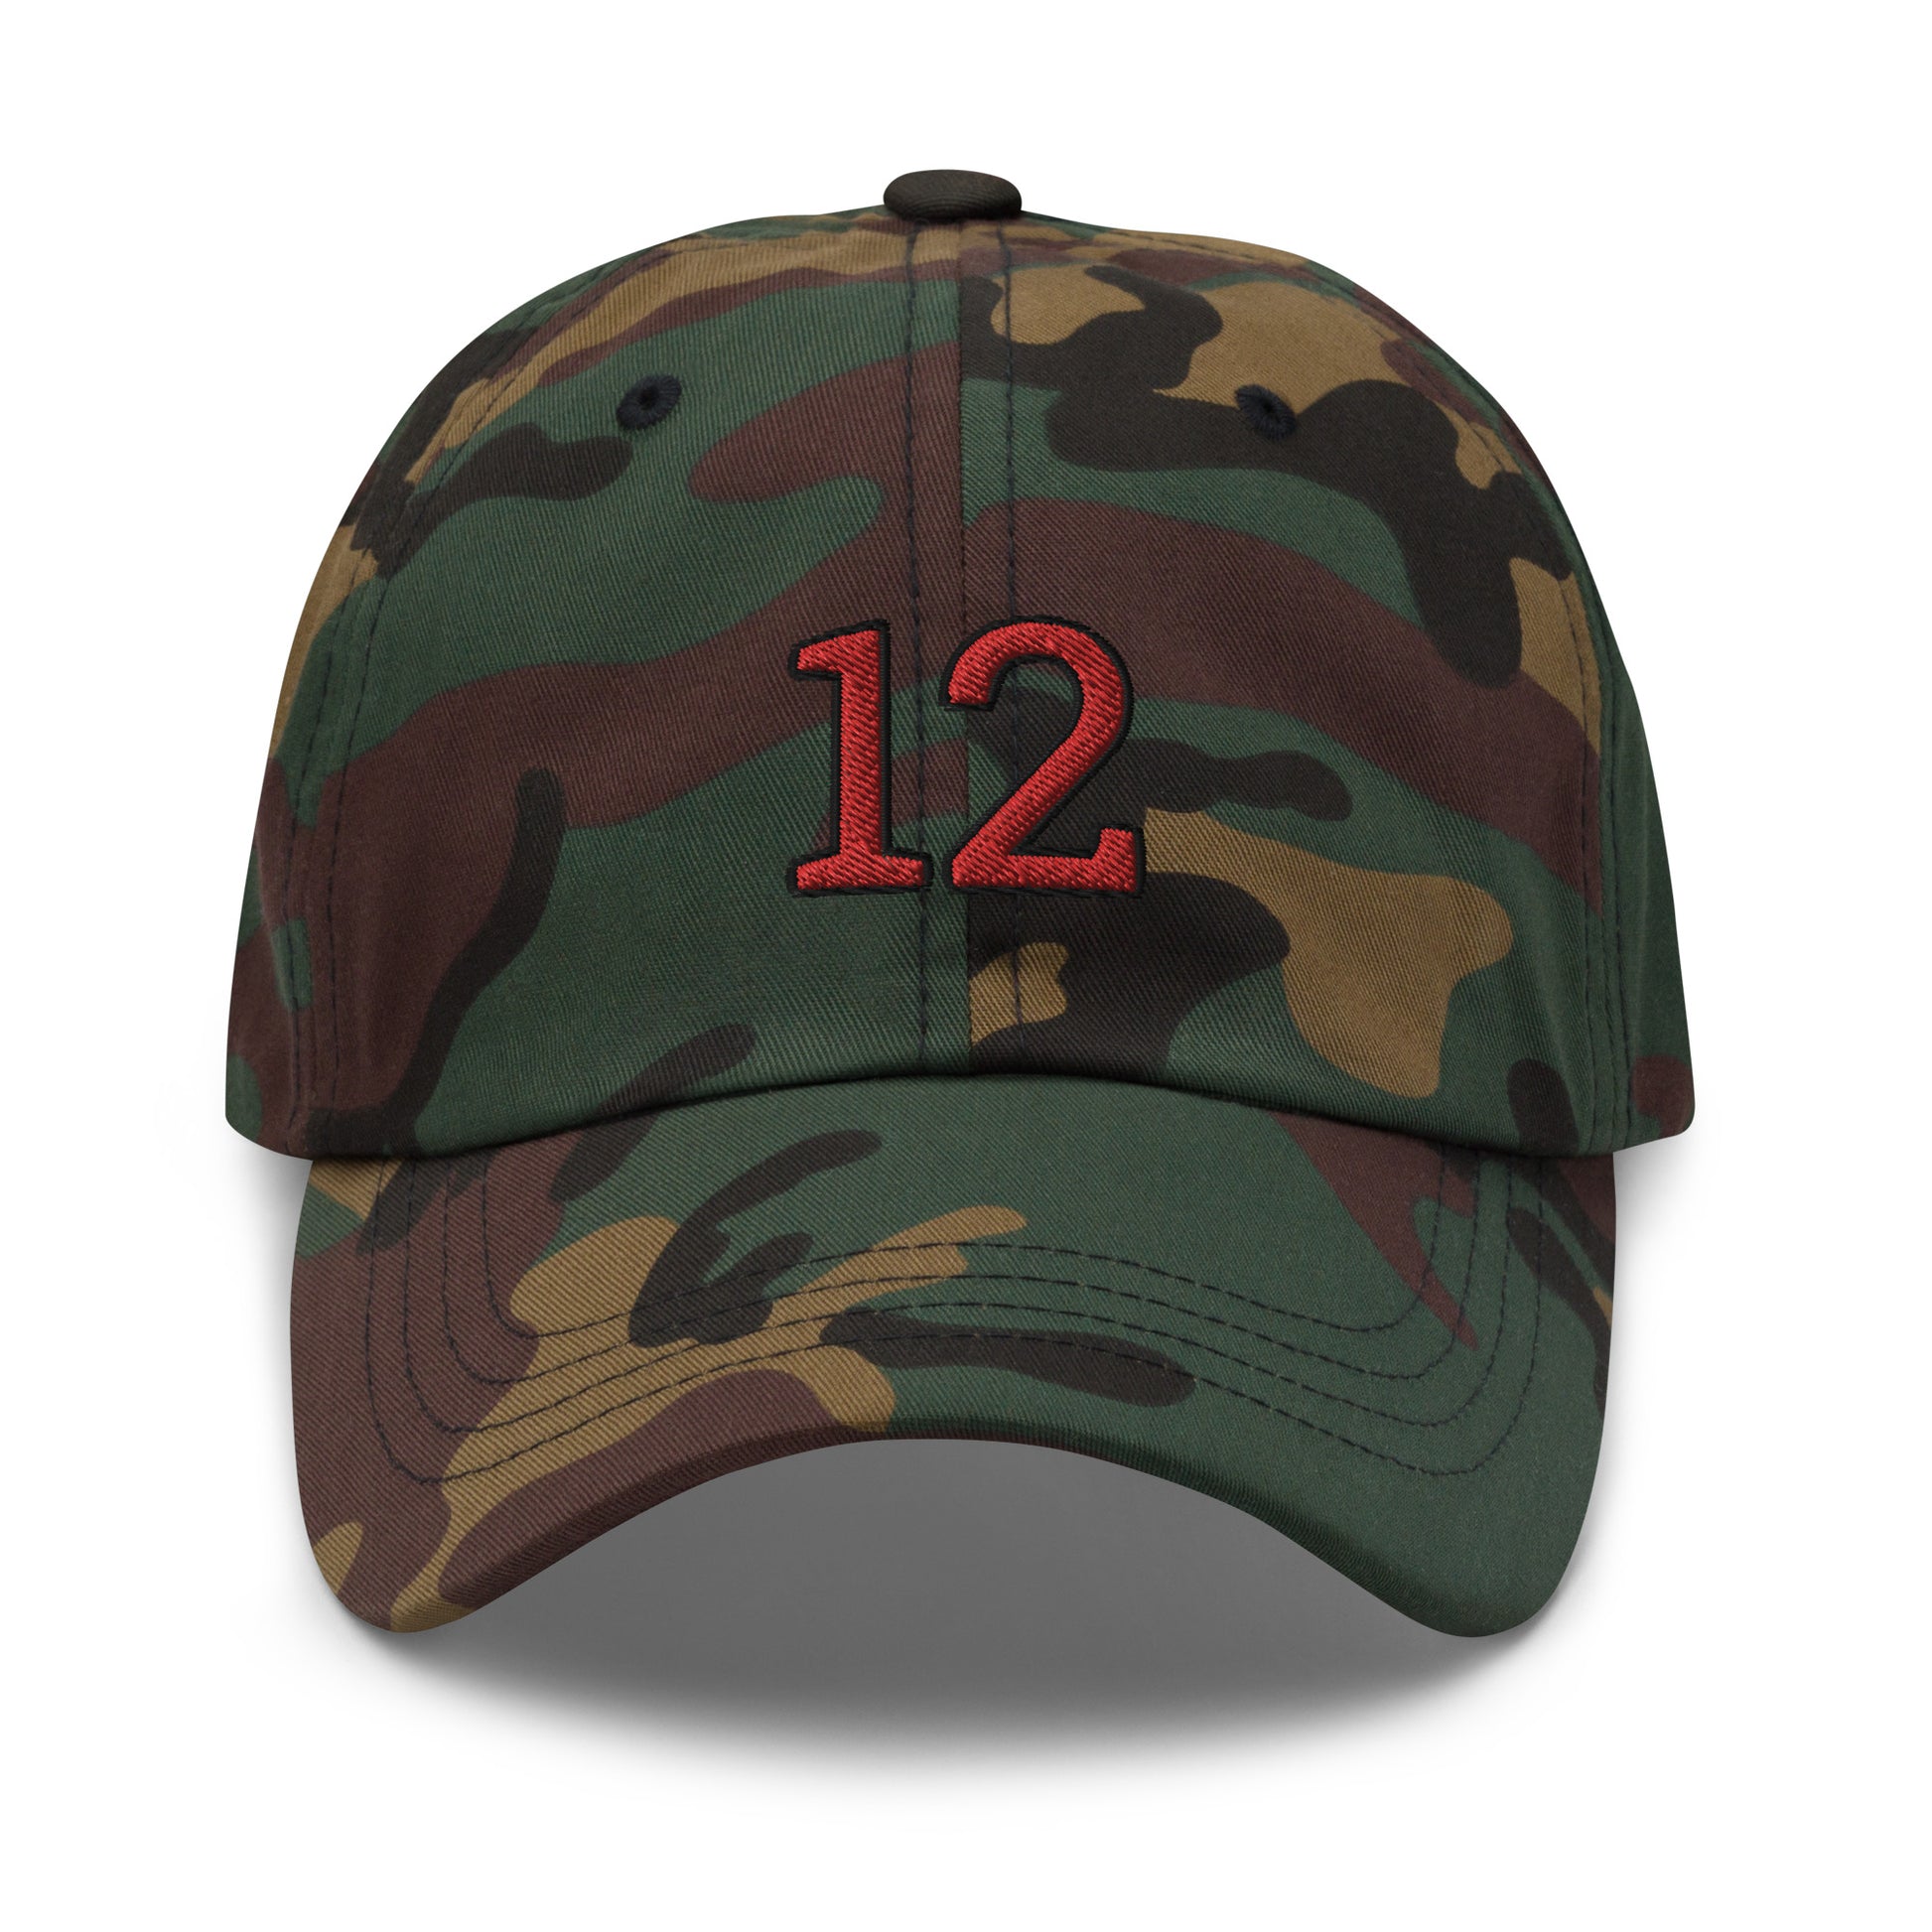 Tom Brady Hat / TB12 Hat / Tampa Bay Buccaneers / 12 Dad hat